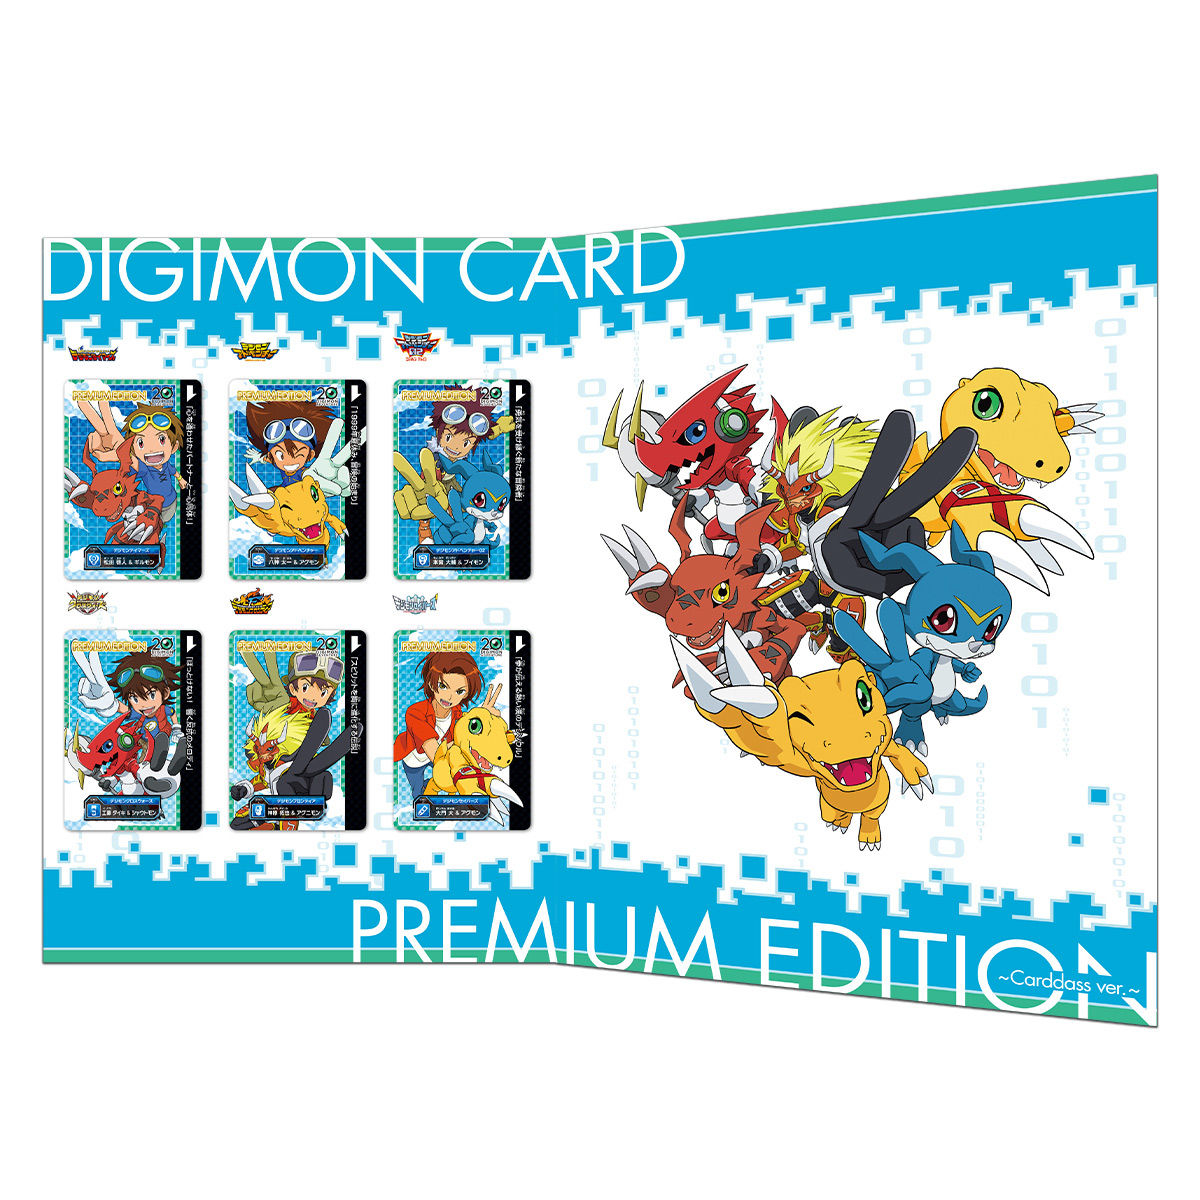 DIGIMON CARD PREMIUM EDITION ~Carddass ver.~